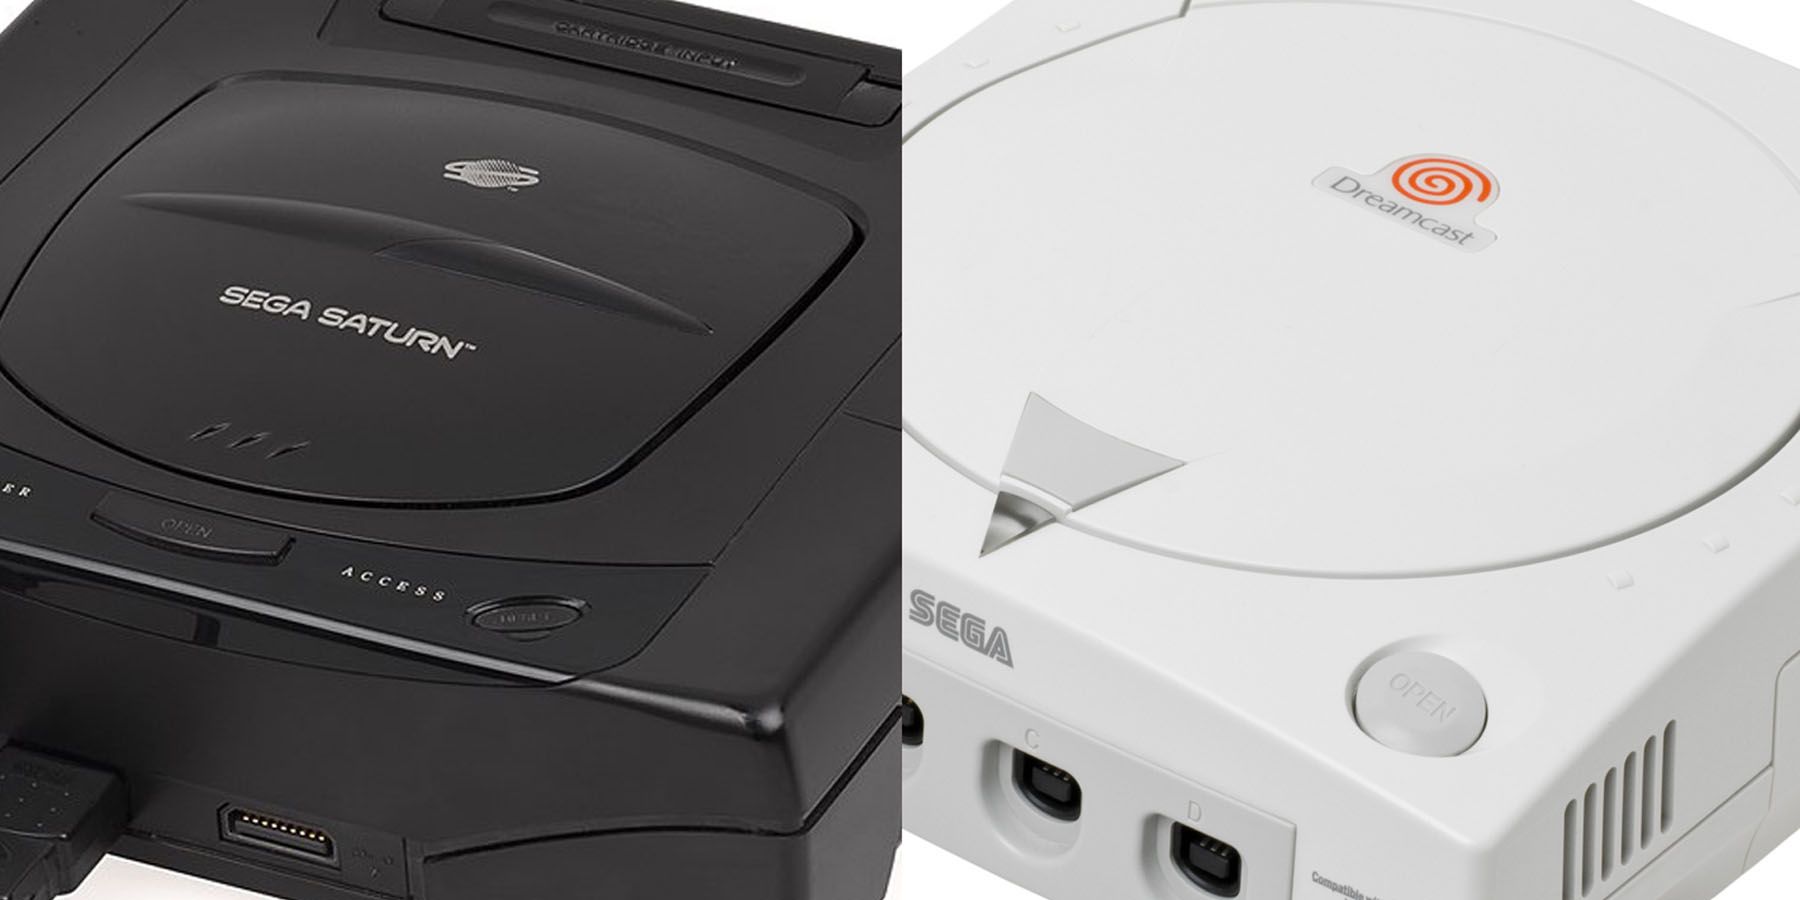 https://static0.gamerantimages.com/wordpress/wp-content/uploads/2022/06/Sega-Dreamcast-Sega-Saturn.jpg